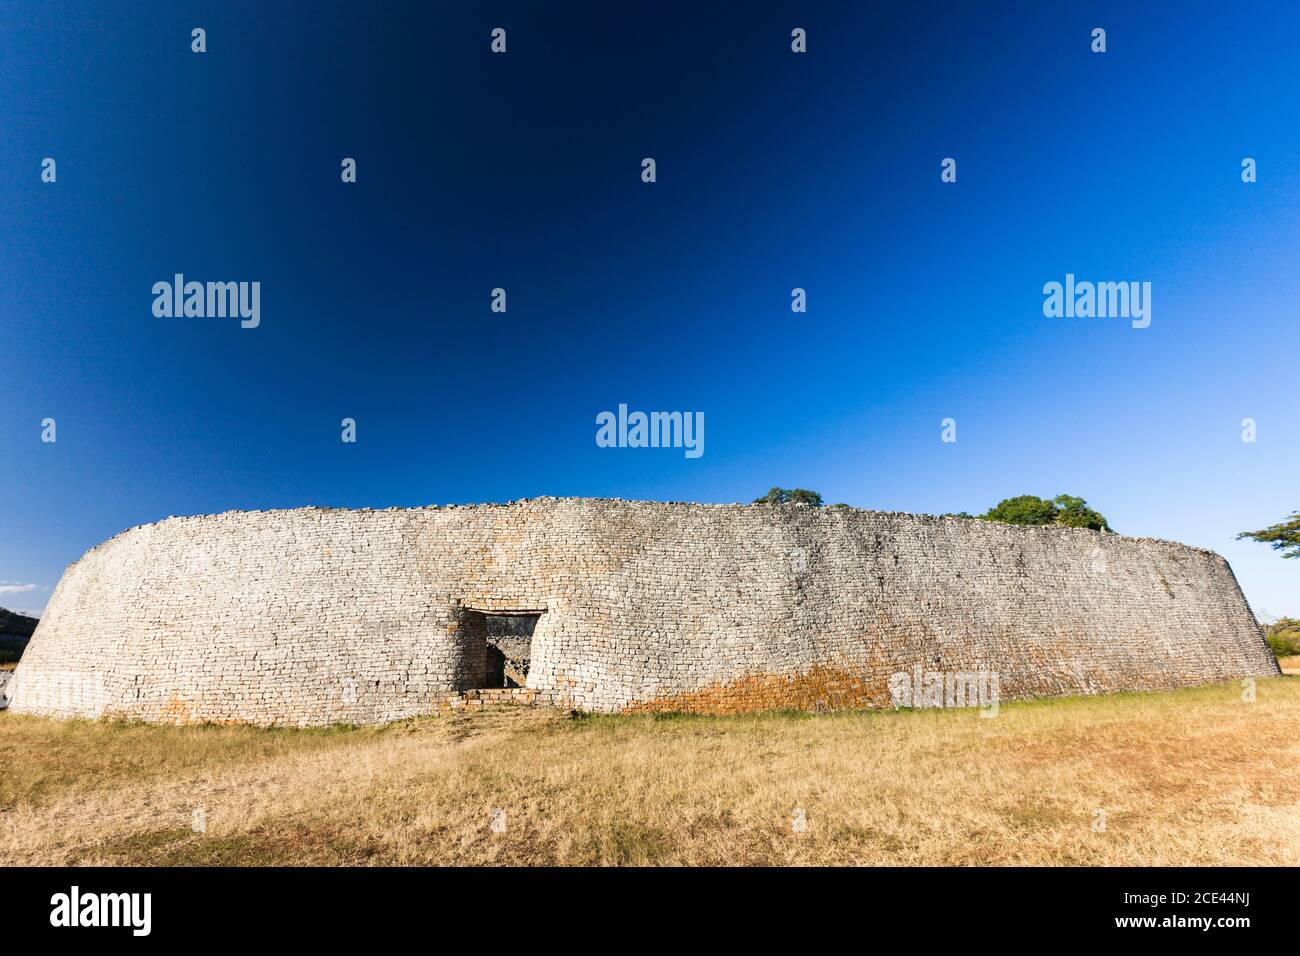 Great Zimbabwe ruins, main structure 'the Great Enclosure', ancient capital of Bantu civilization, Masvingo Province, Zimbabwe, Africa Stock Photo